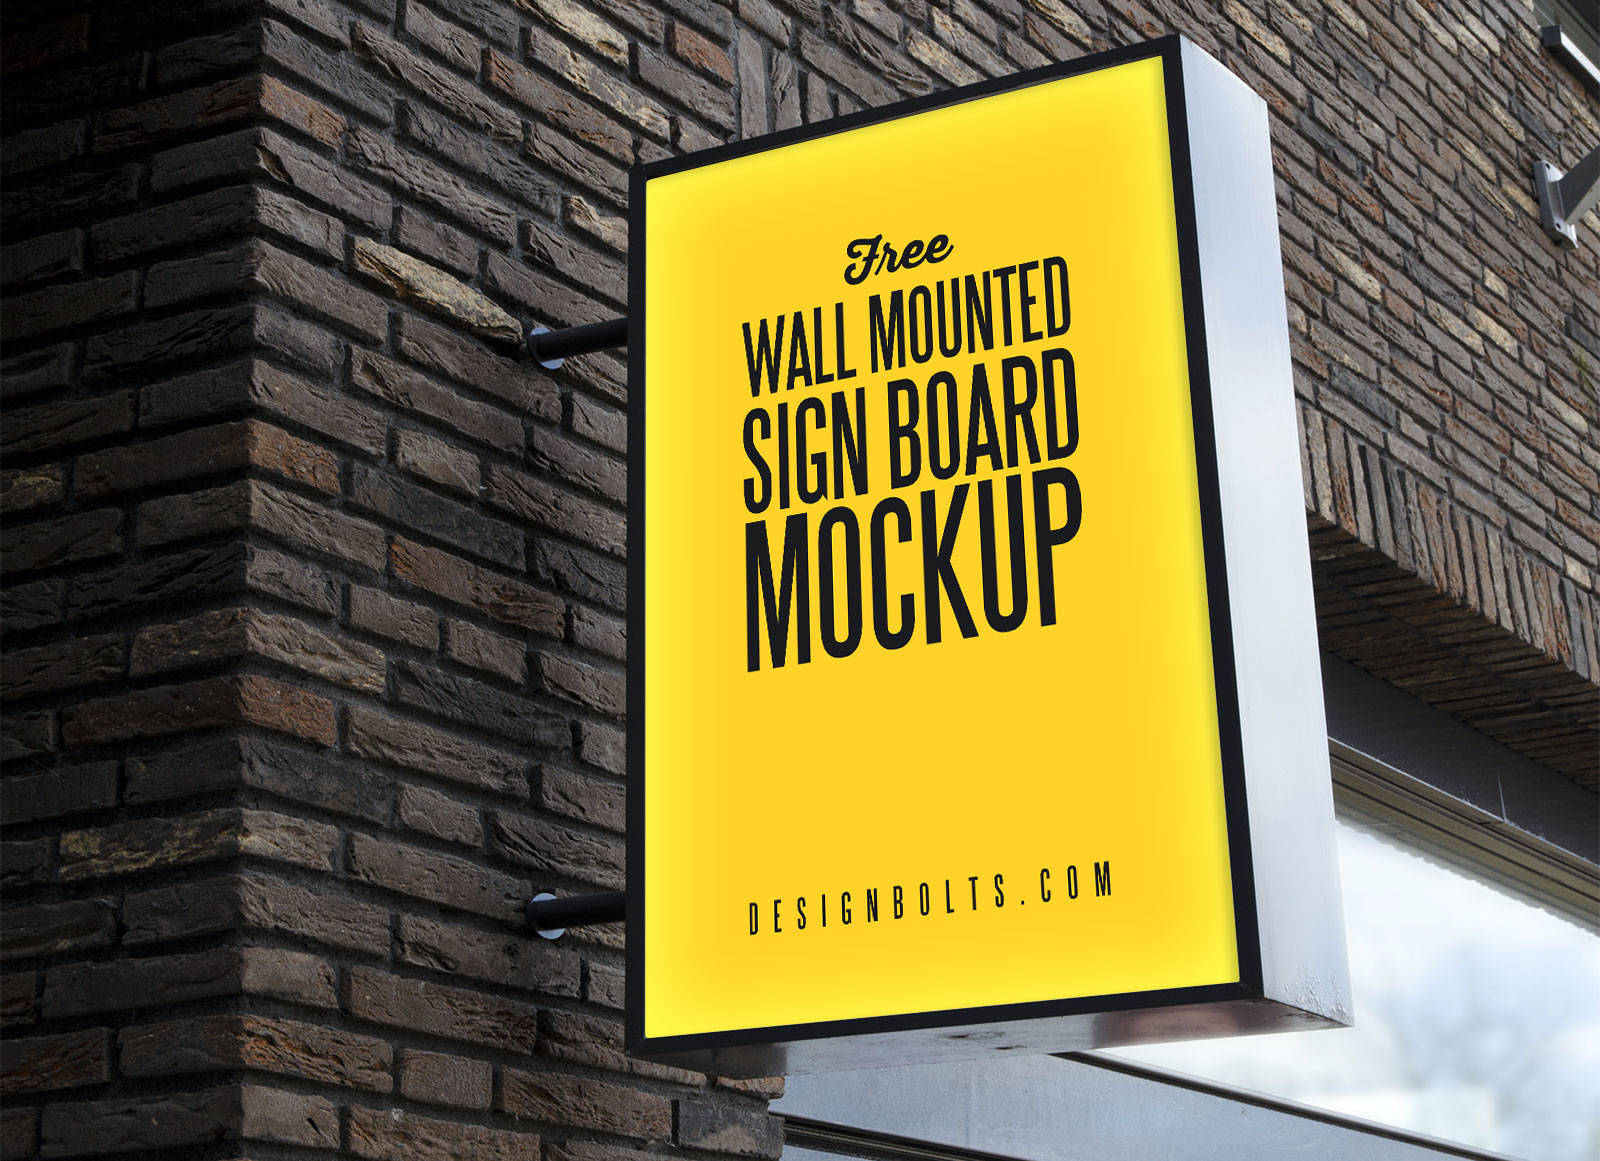 Download Free Wall Mounted Backlit Shop Sign Board Mockup PSD ...